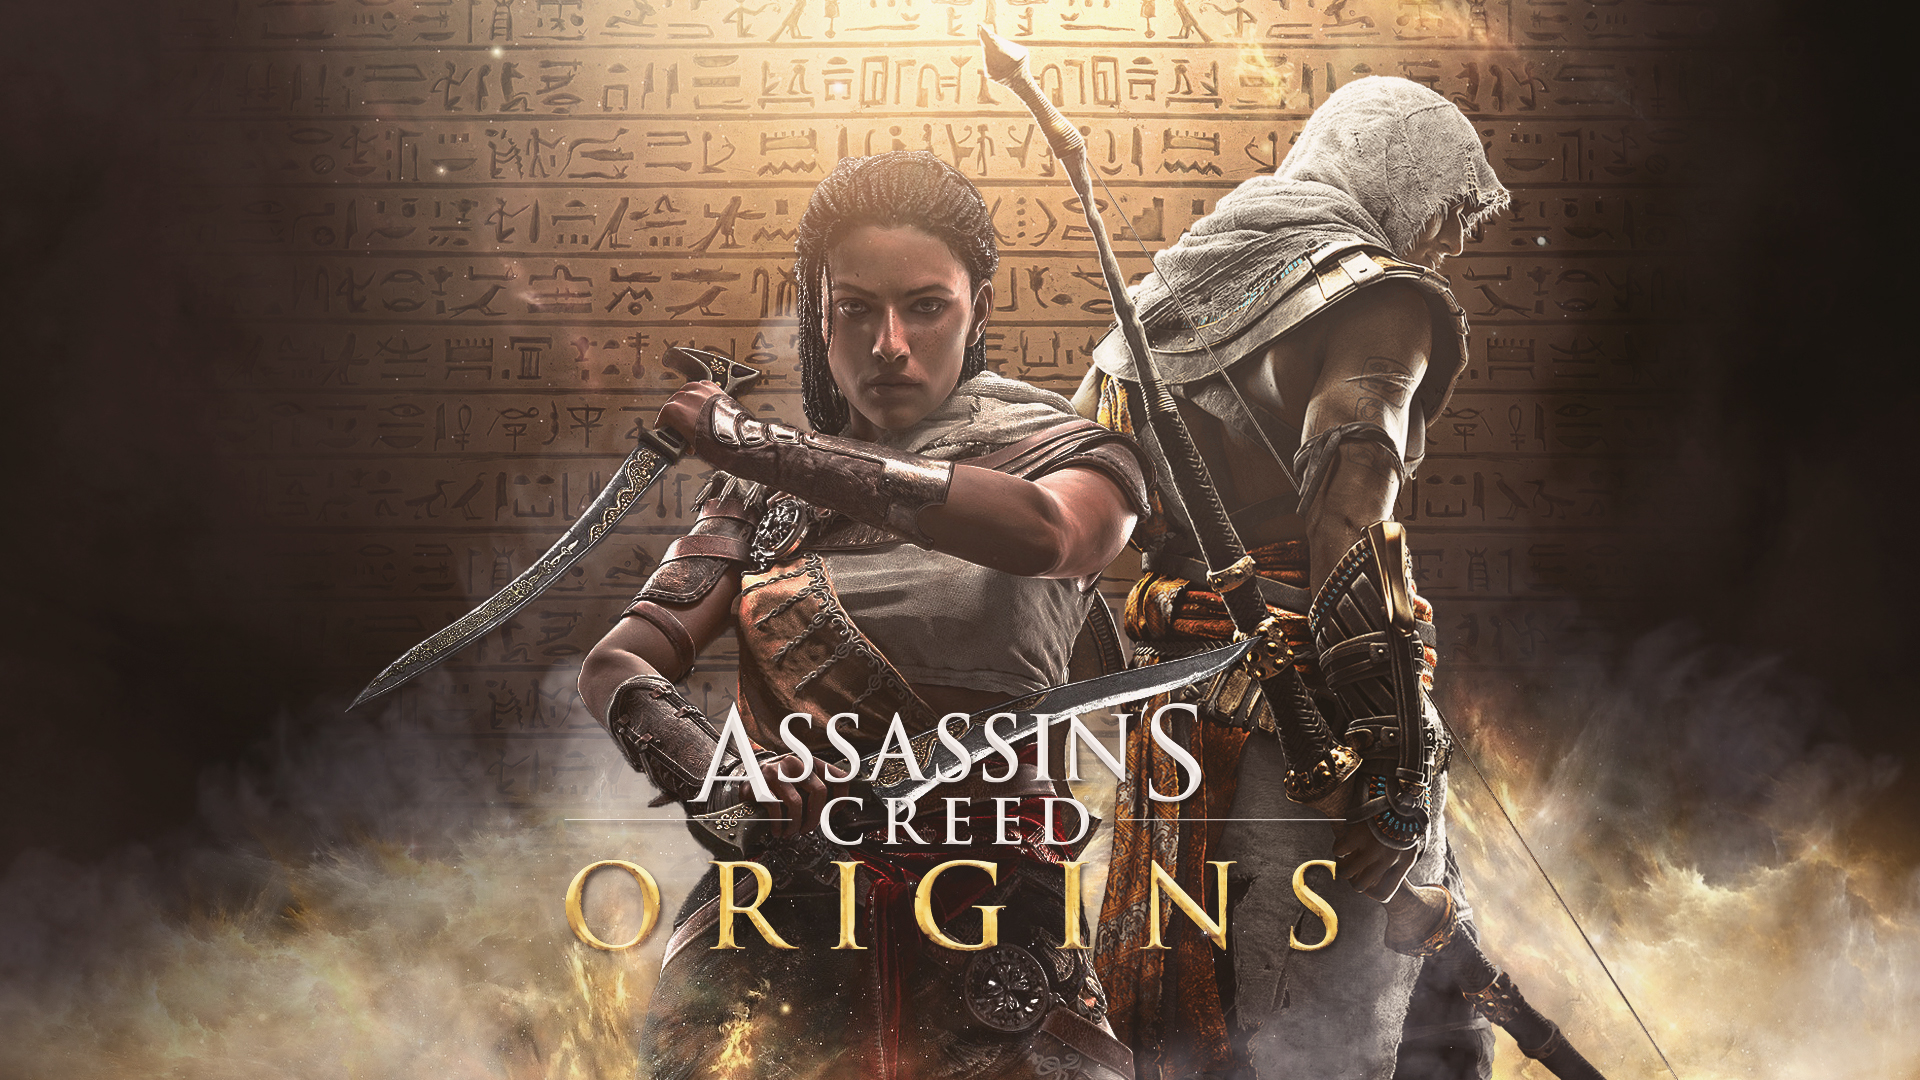 Assassins Creed Origins - Aya and Bayek wallpaper by MizoreSYO on DeviantArt